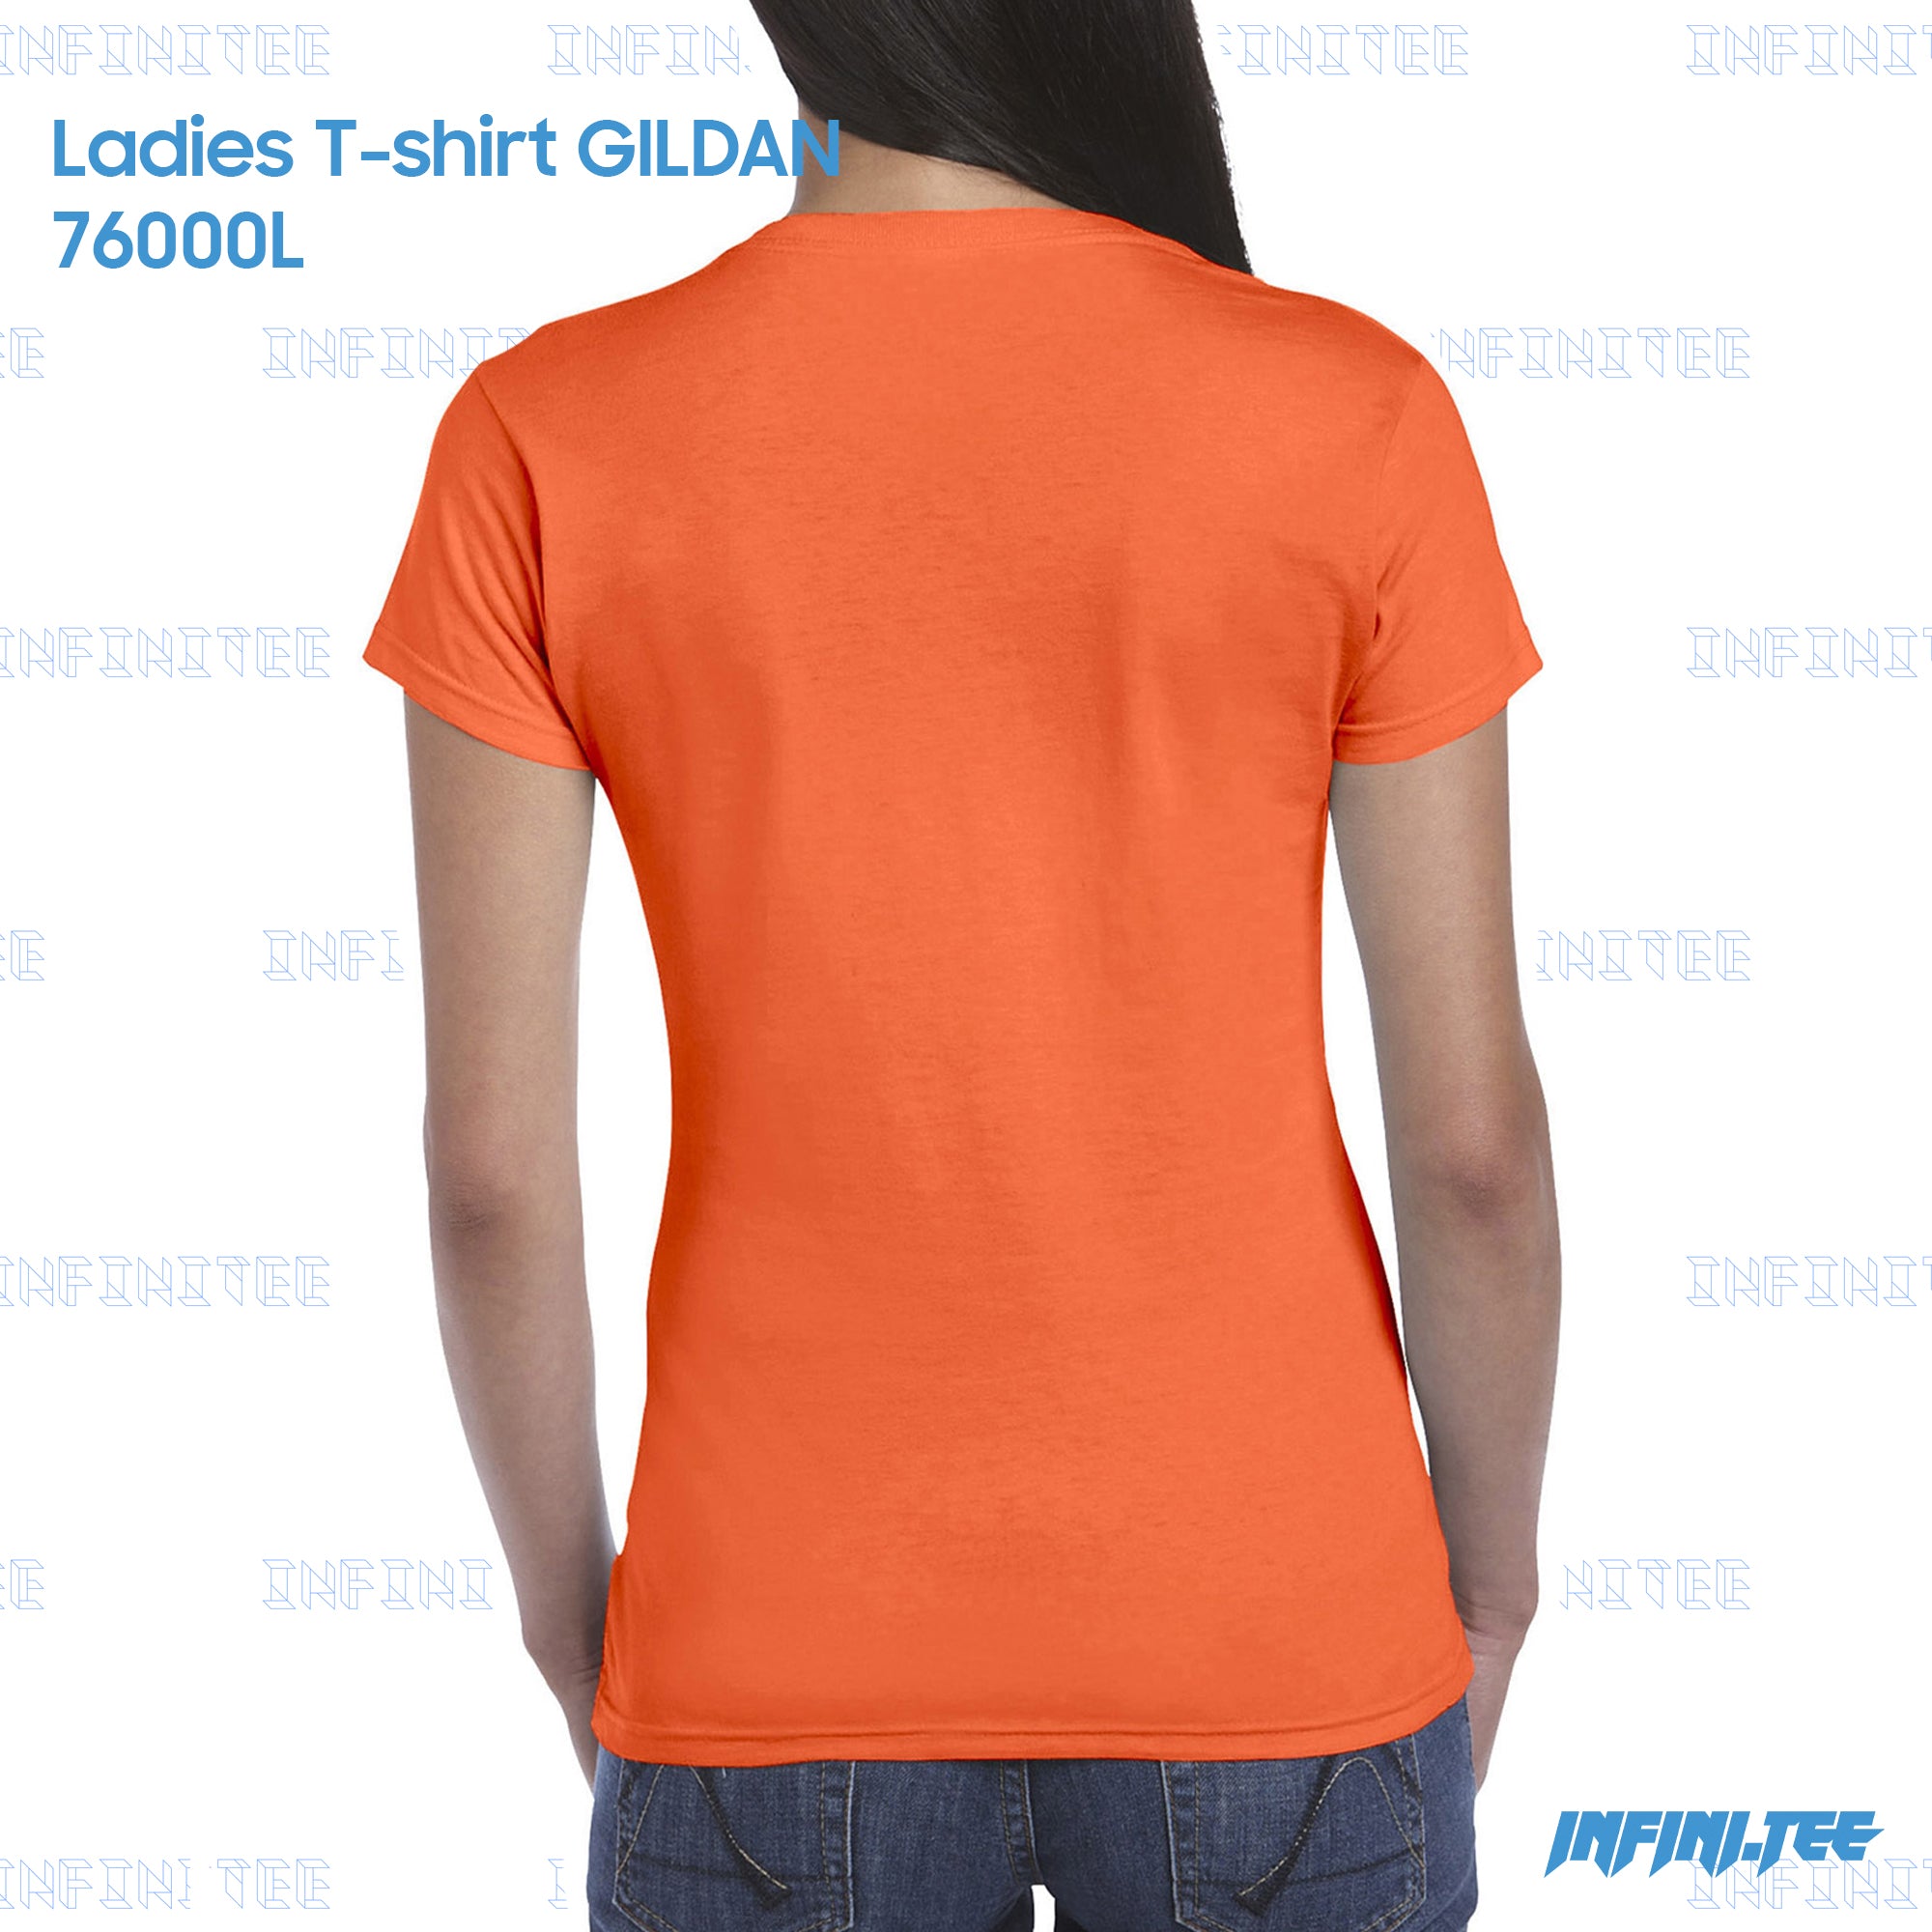 Ladies T-shirt 76000L GILDAN - ORANGE